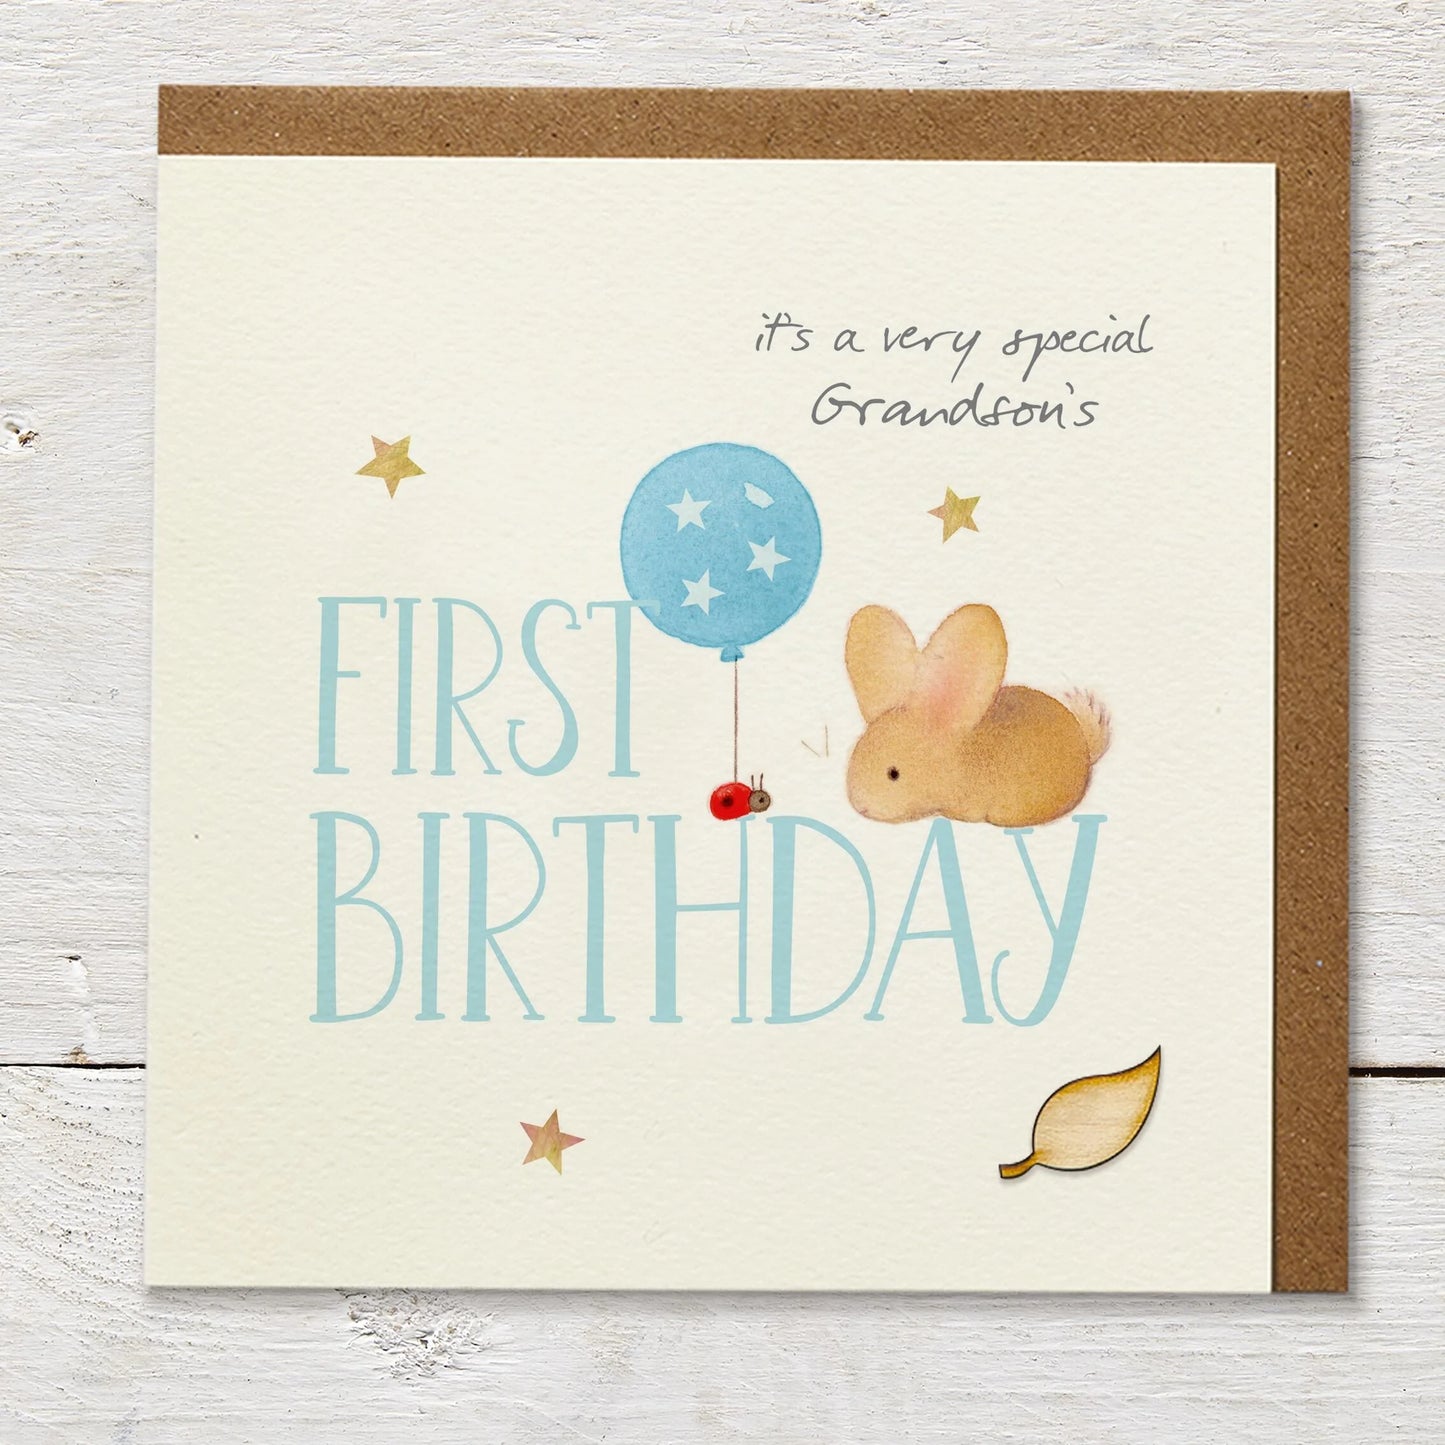 Grandson’s First Birthday Greeting Card